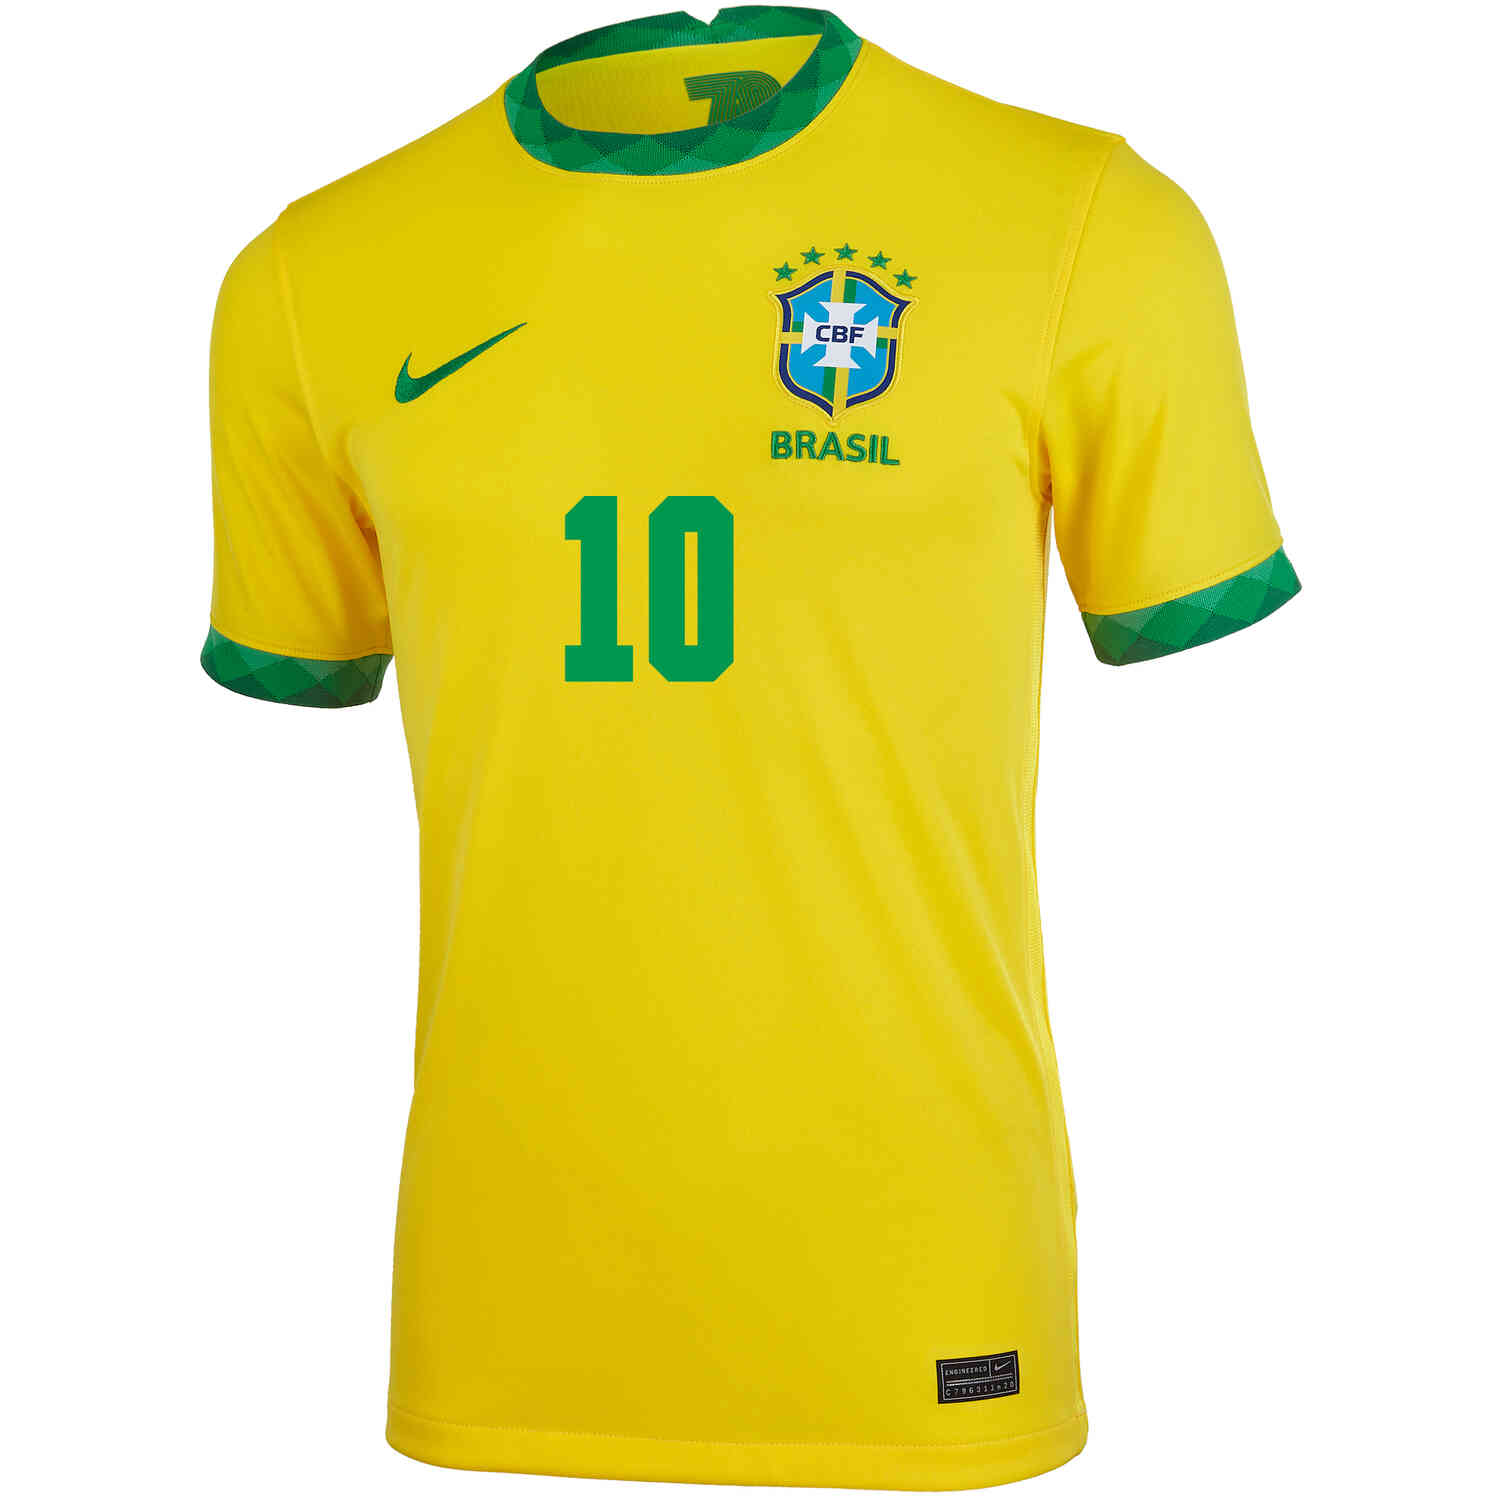 2020 Kids Nike Neymar Jr Brazil Home Jersey - SoccerPro